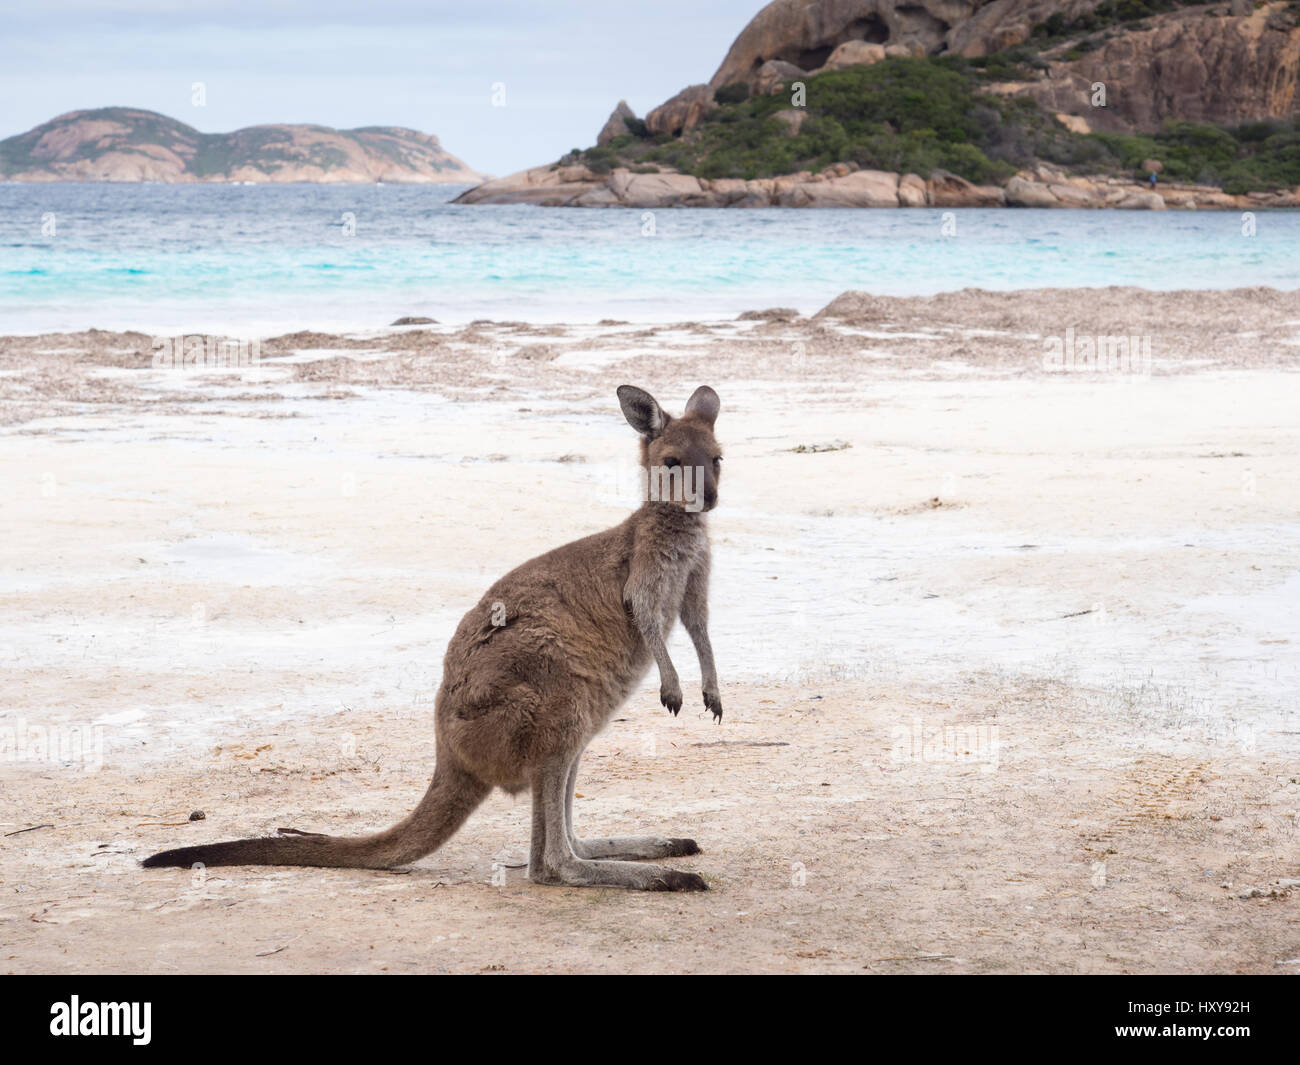 Kangaroo on beach in Lucky Bay, Cape Le Grand National Park, Western Australia Stock Photo